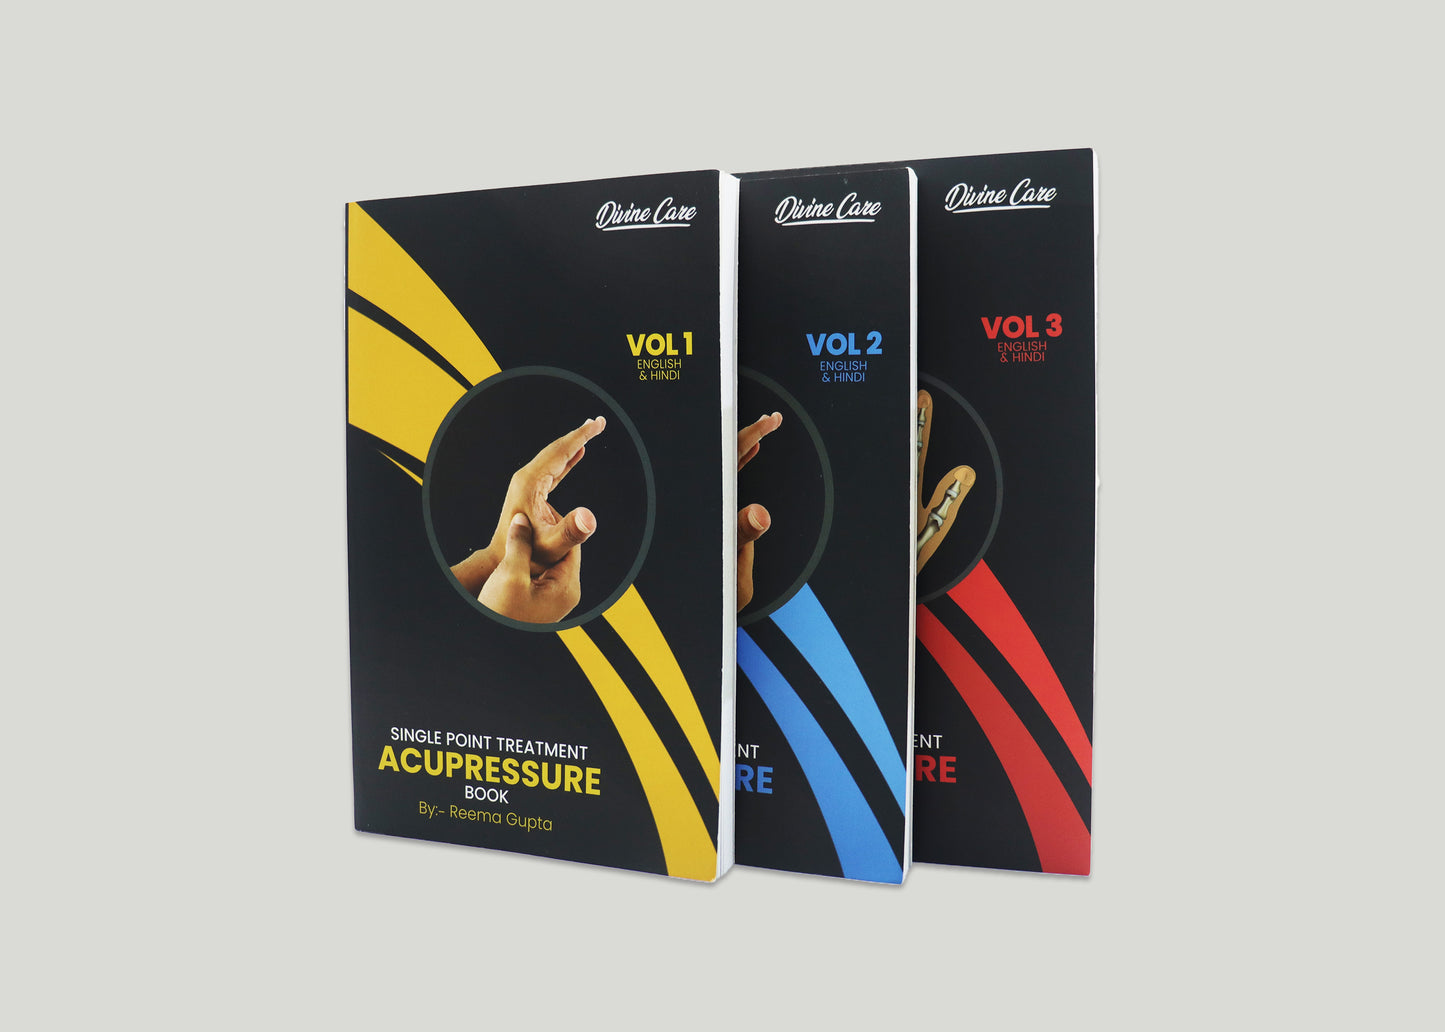 Acupressure Book (VOL 1+2+3) + Acupressure Kit COMBO